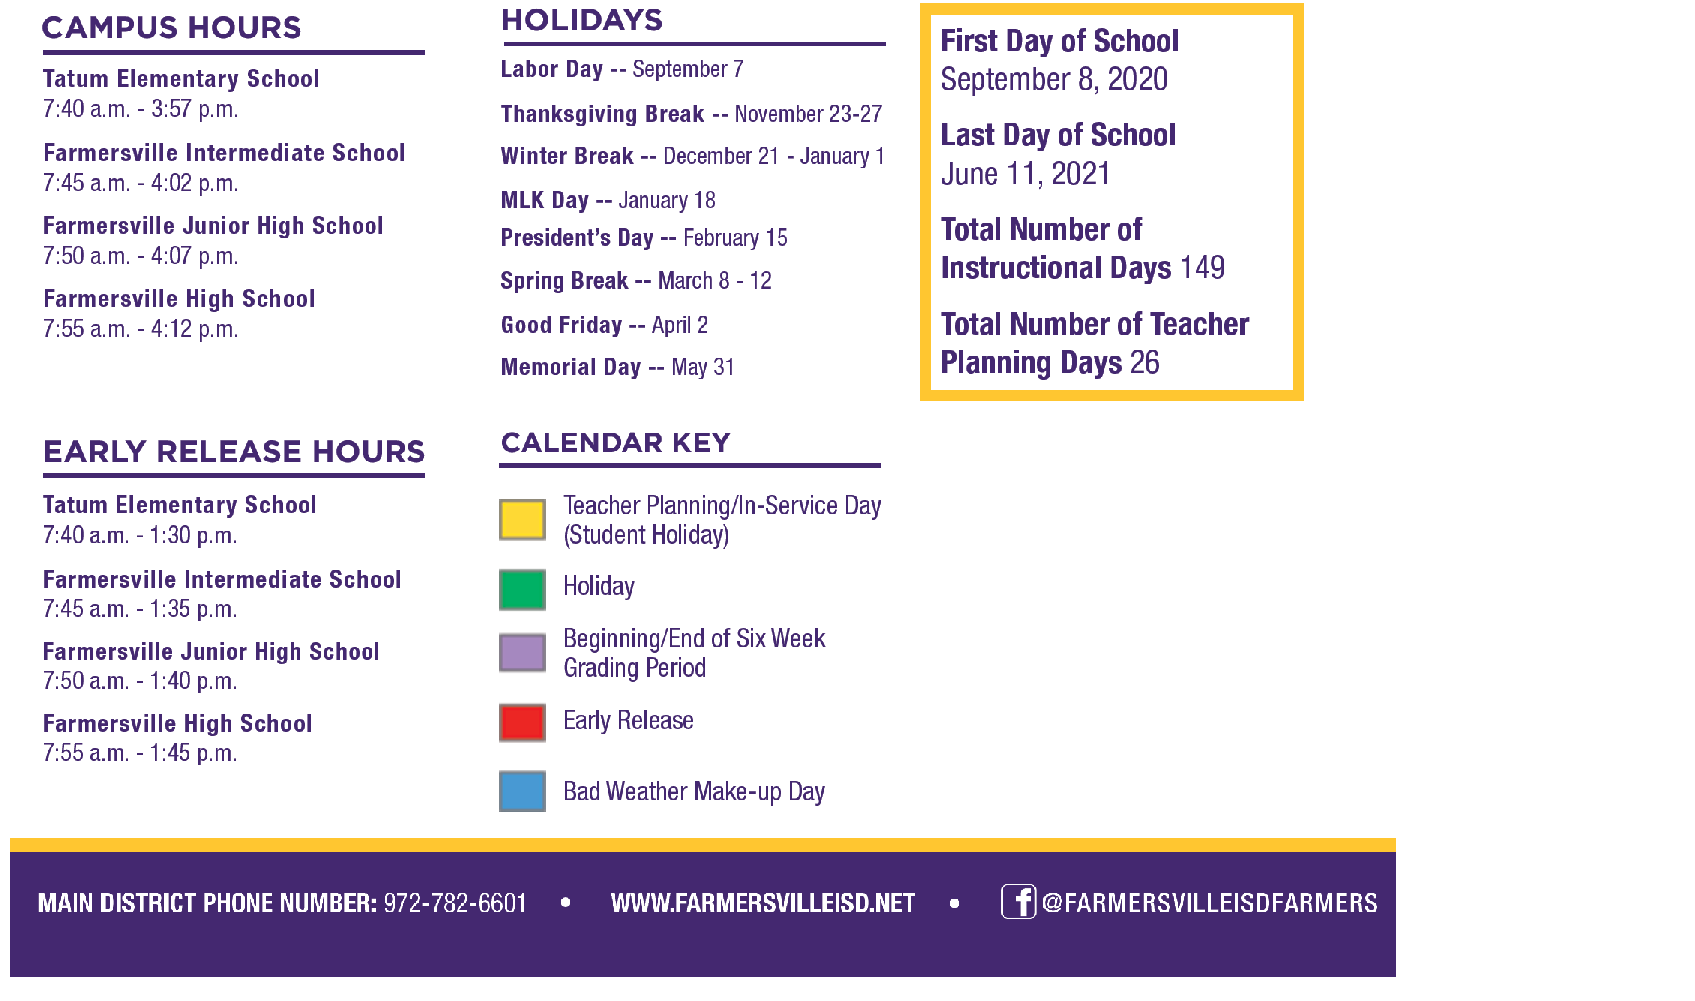 District School Academic Calendar Key for Farmersville Intermediate School